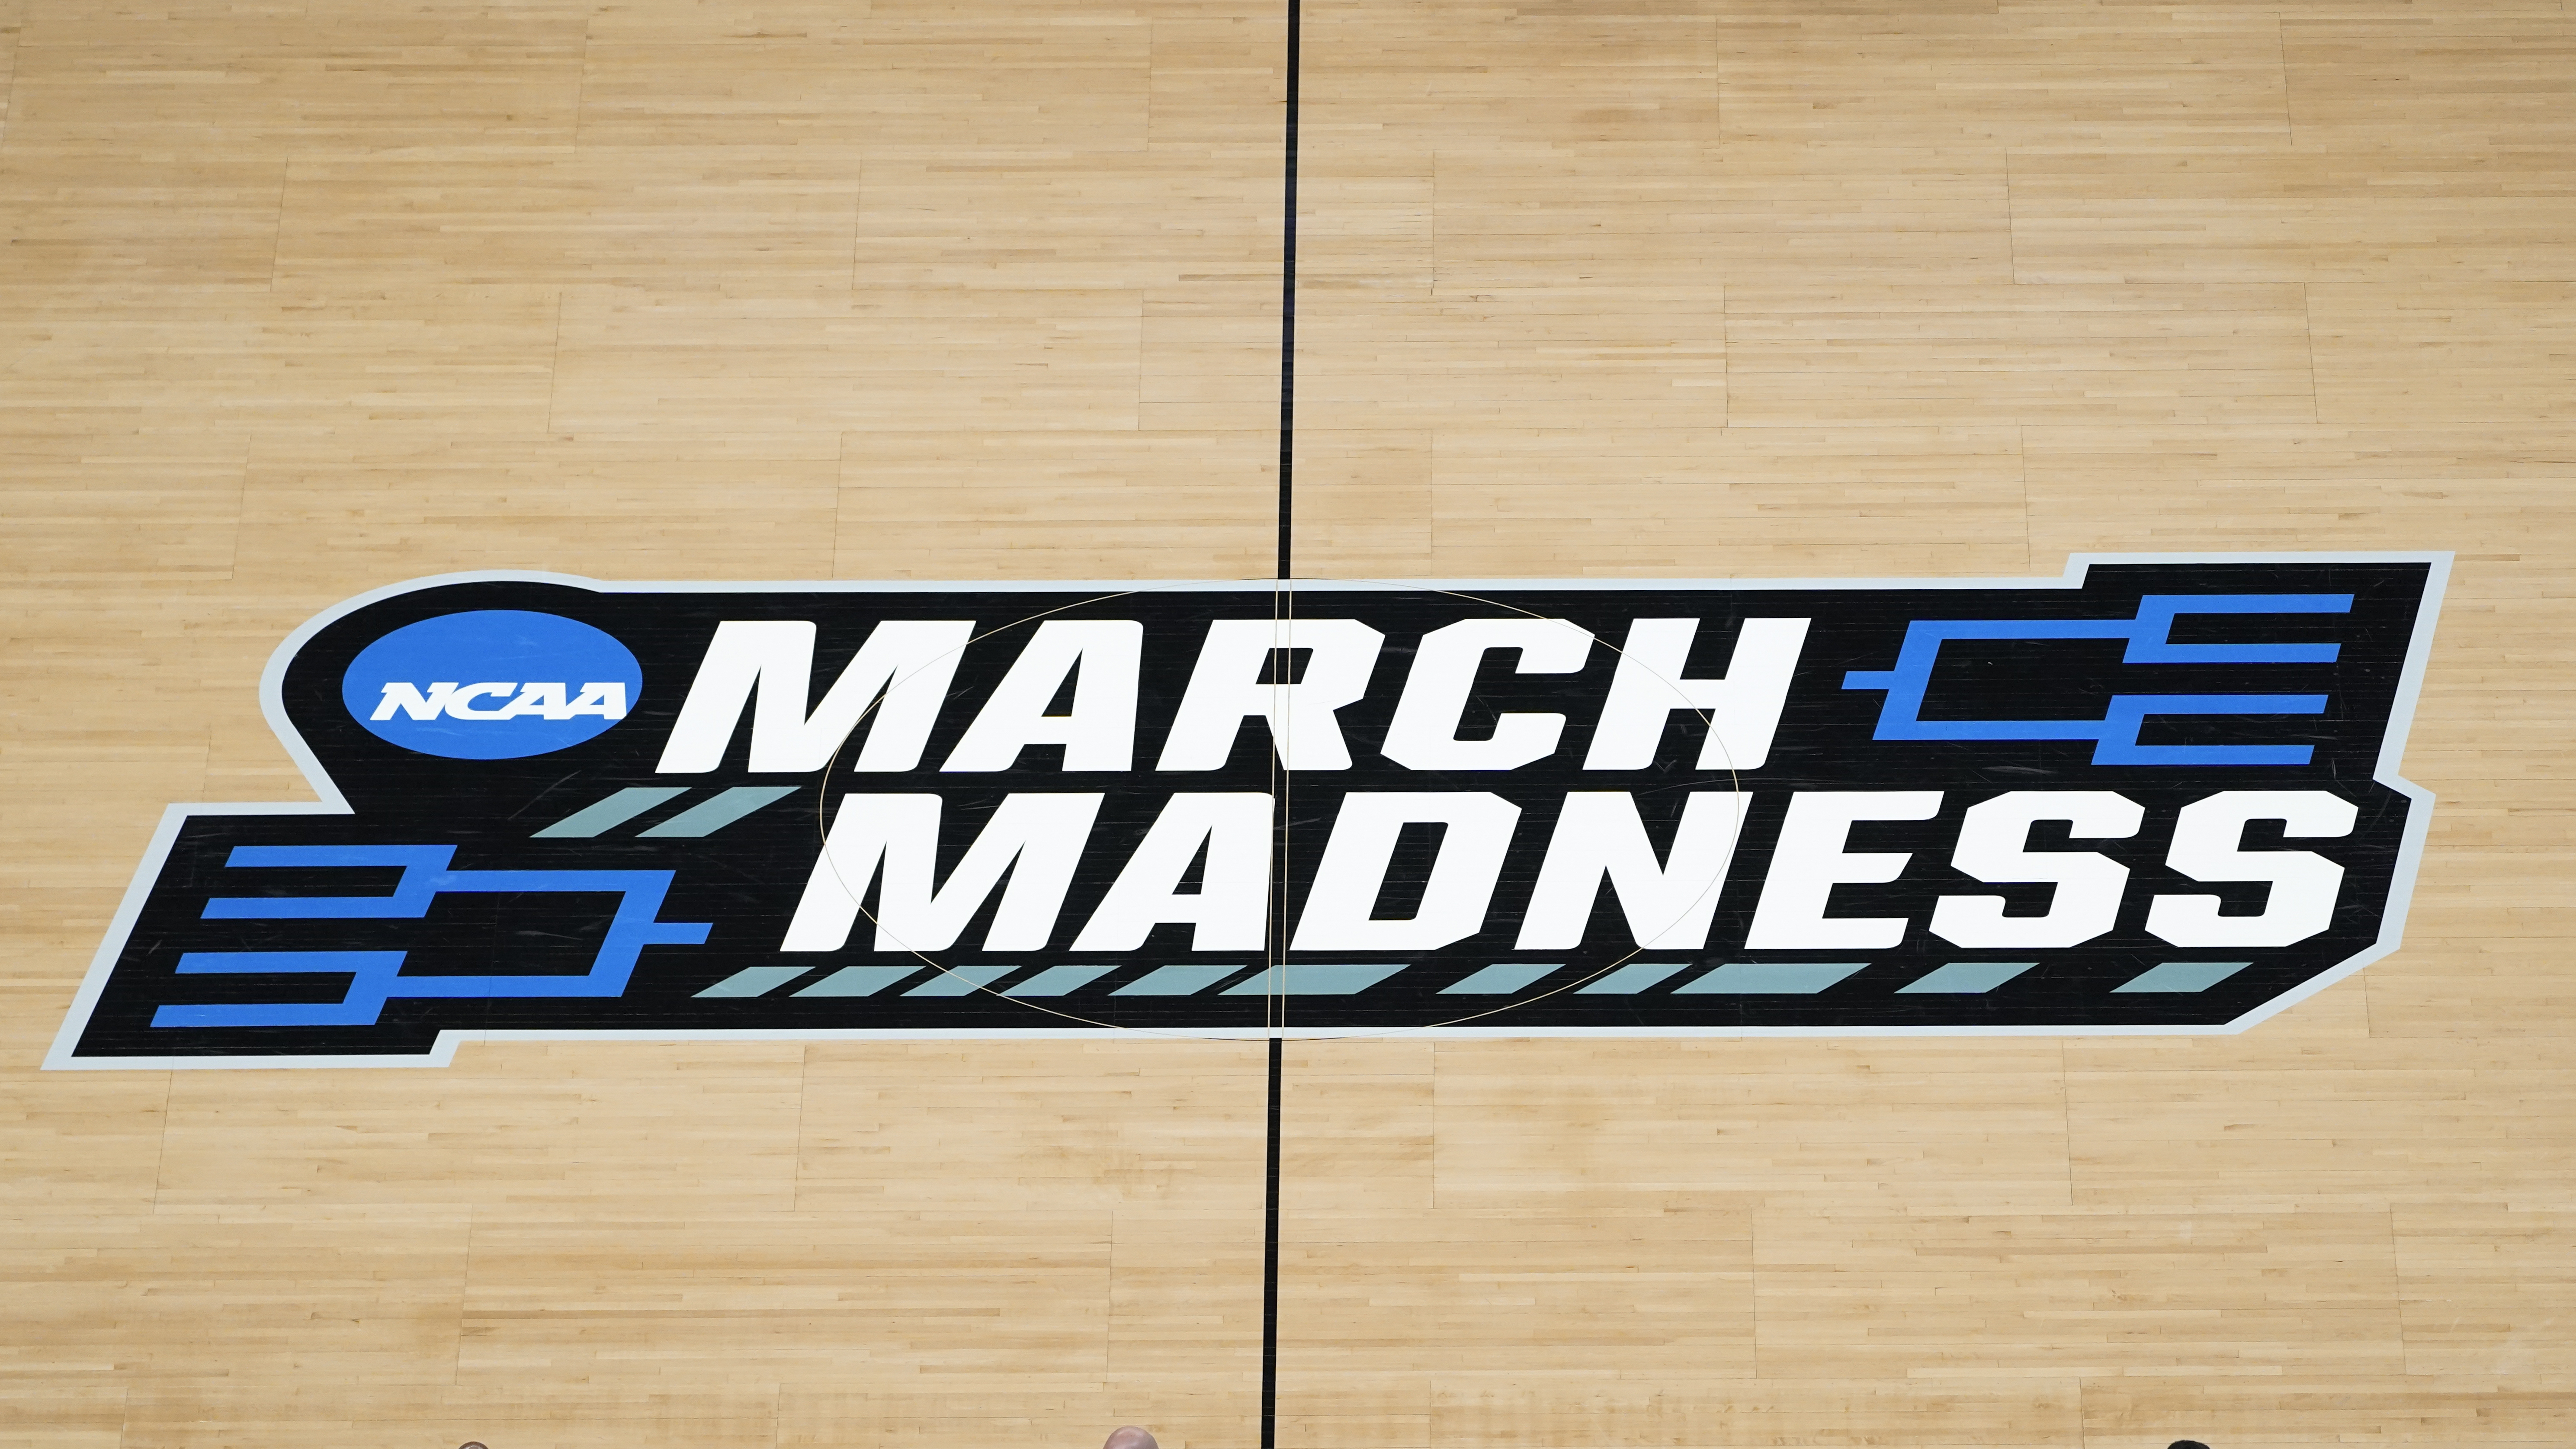 March Madness - NCAA logo - basketball court